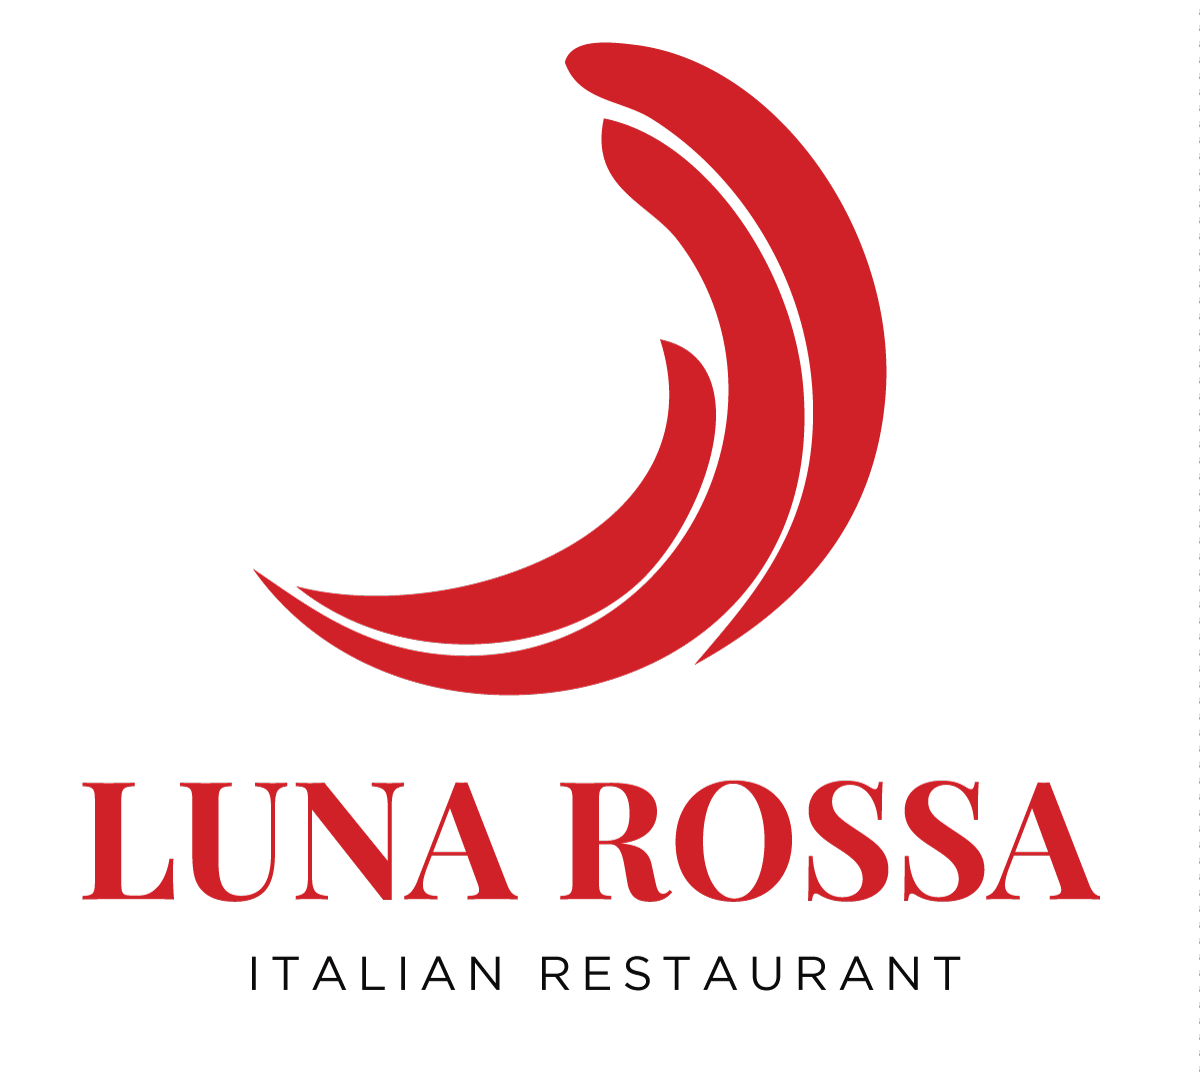 Luna Rossa Ristorante 347 East 85th Street